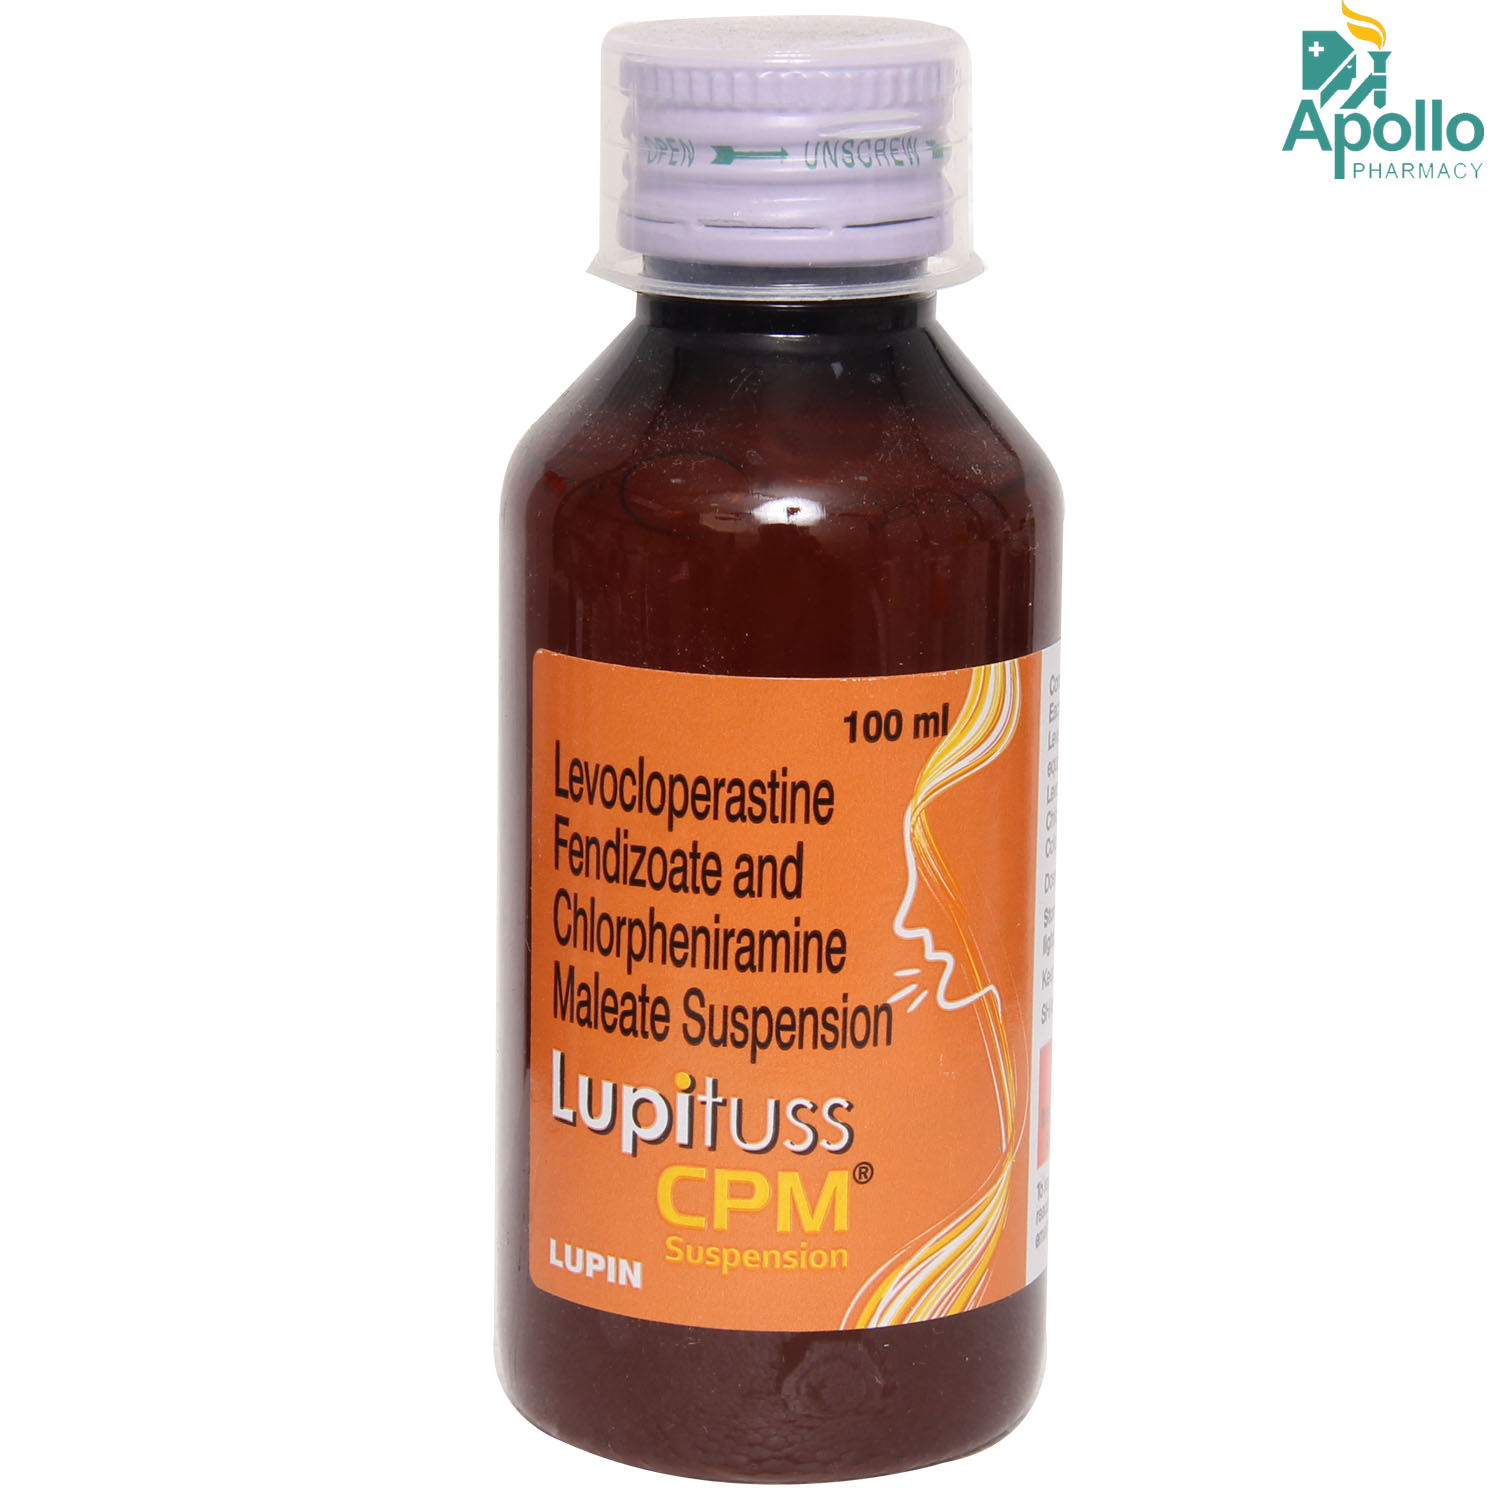 Buy Lupituss CPM Suspension 100 ml Online